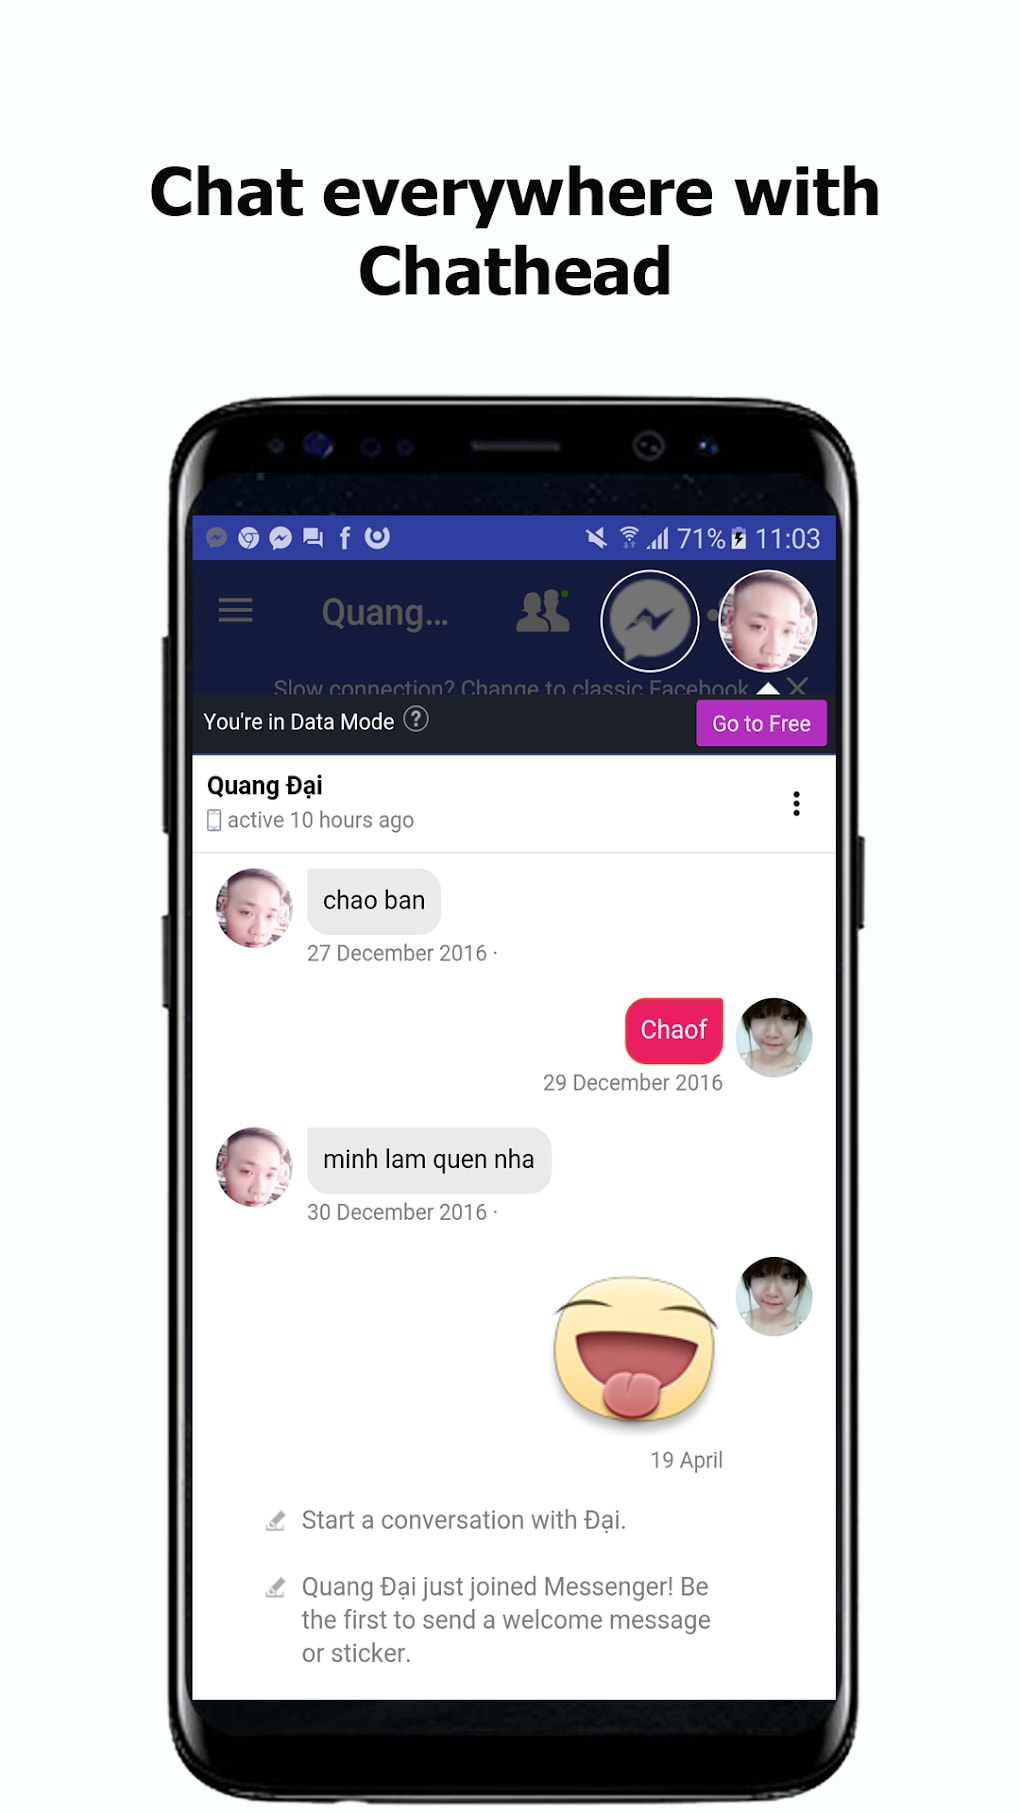 Facebook Lite: social network testing slim app for slow phone